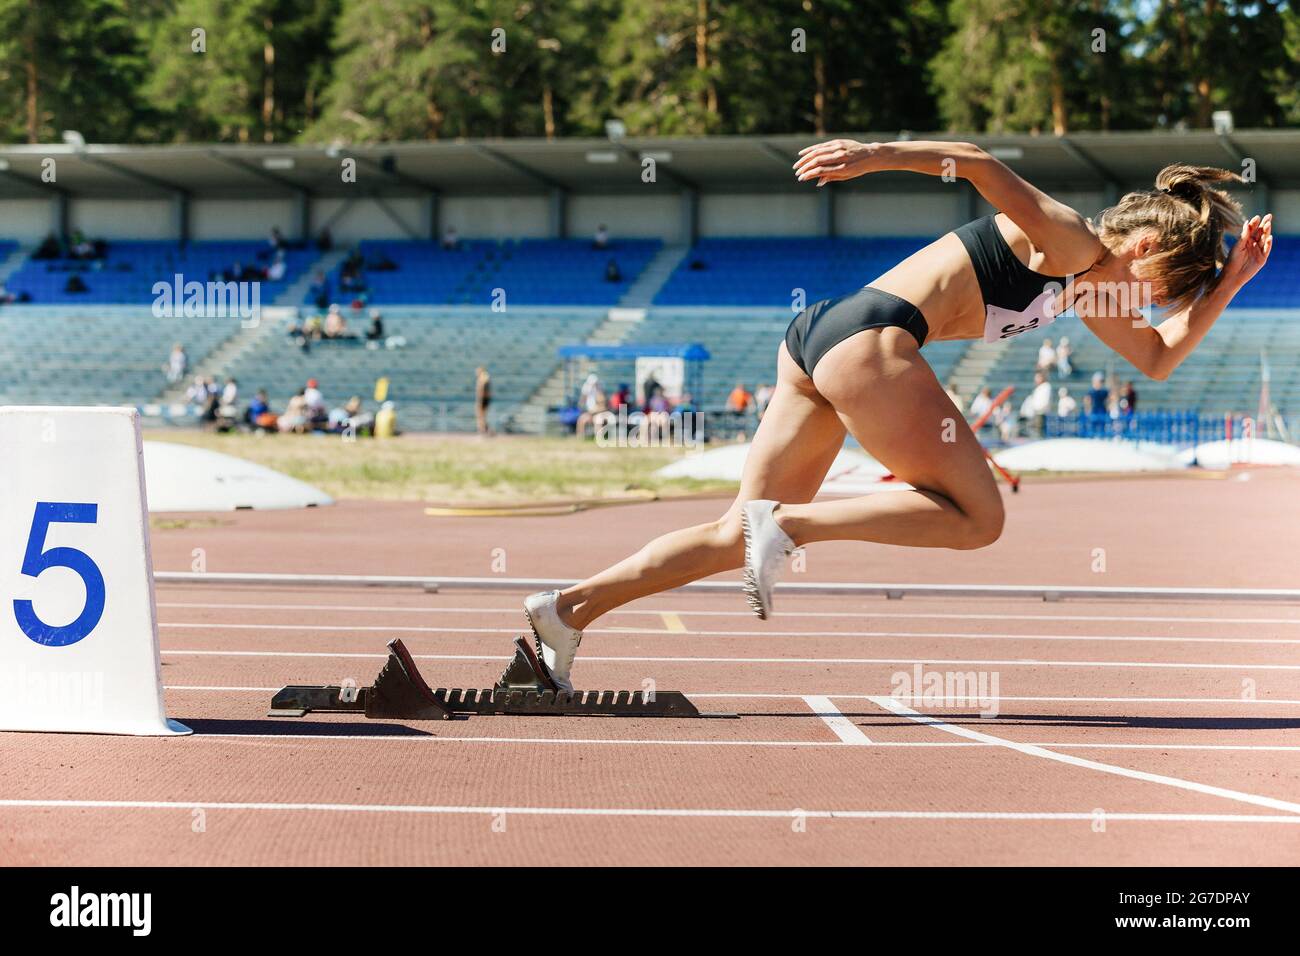 girl runner sprinter running from starting blocks to competition Stock Photo